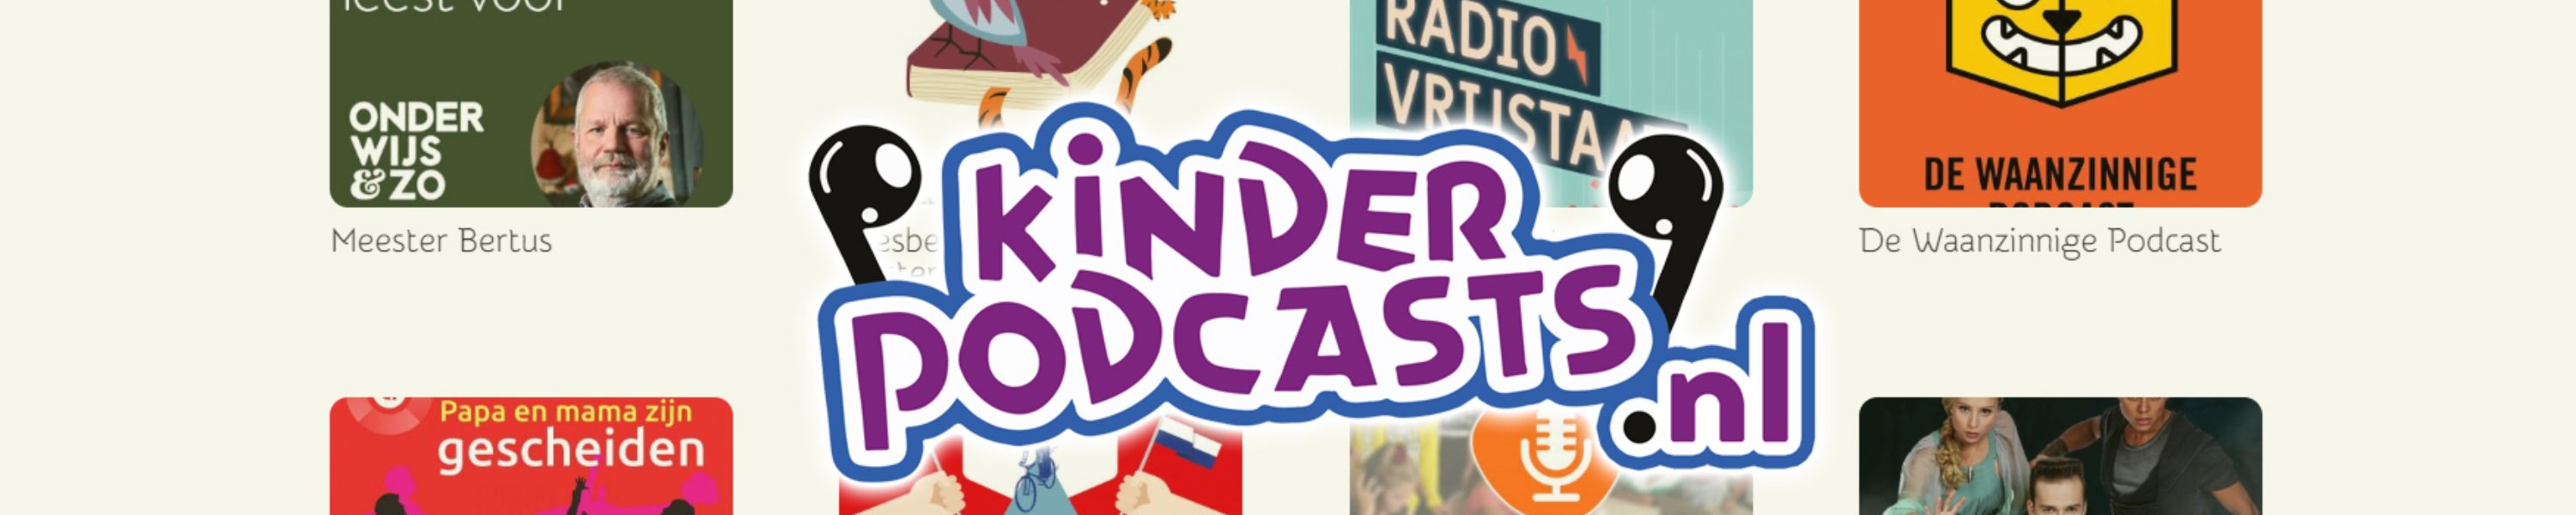 Kinderpodcasts Nederland